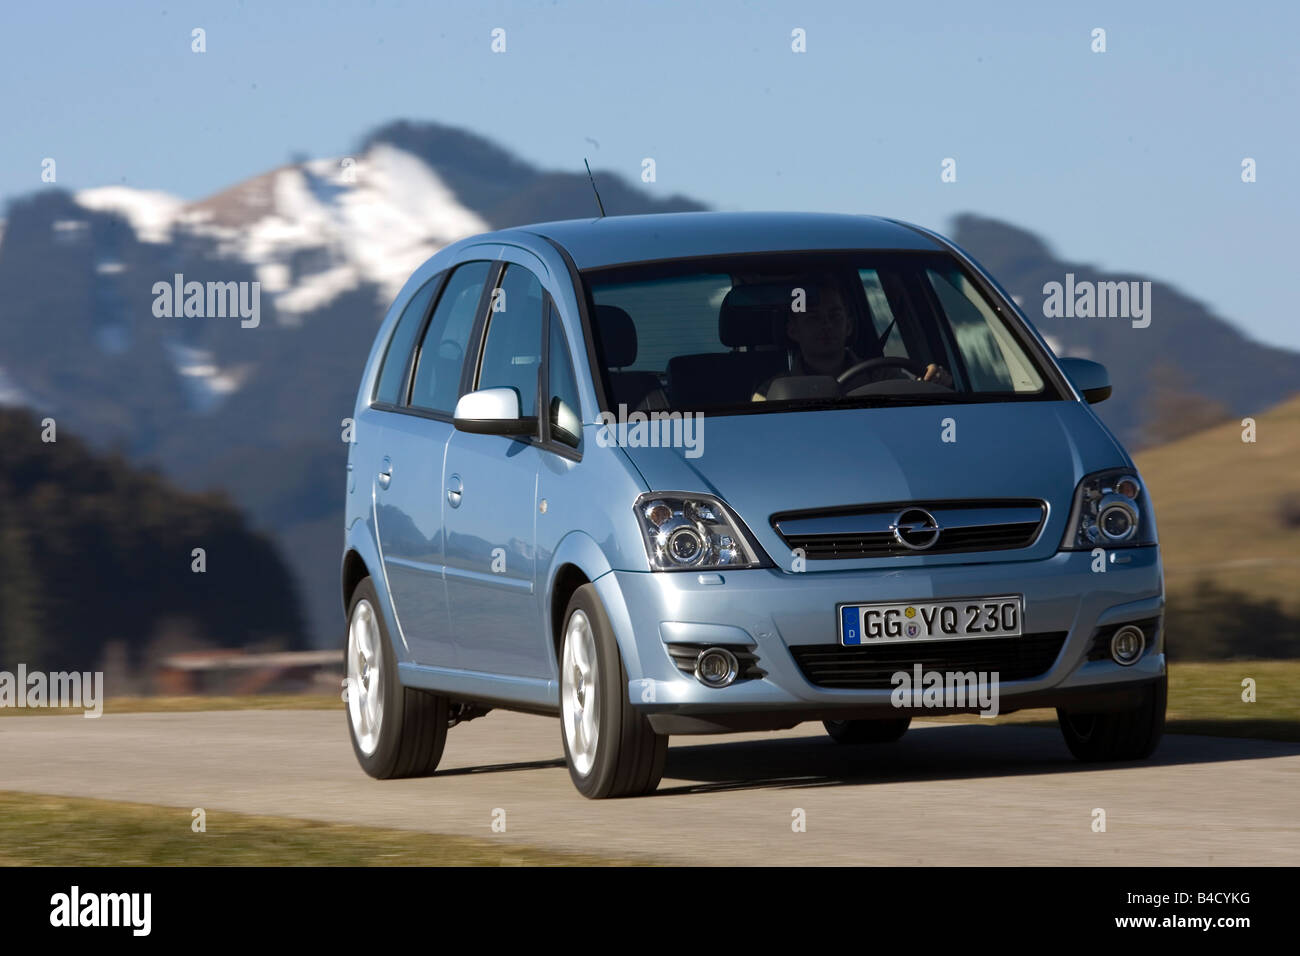 Opel Meriva 1.7 CDTi, model year 2007-, silver, driving, diagonal